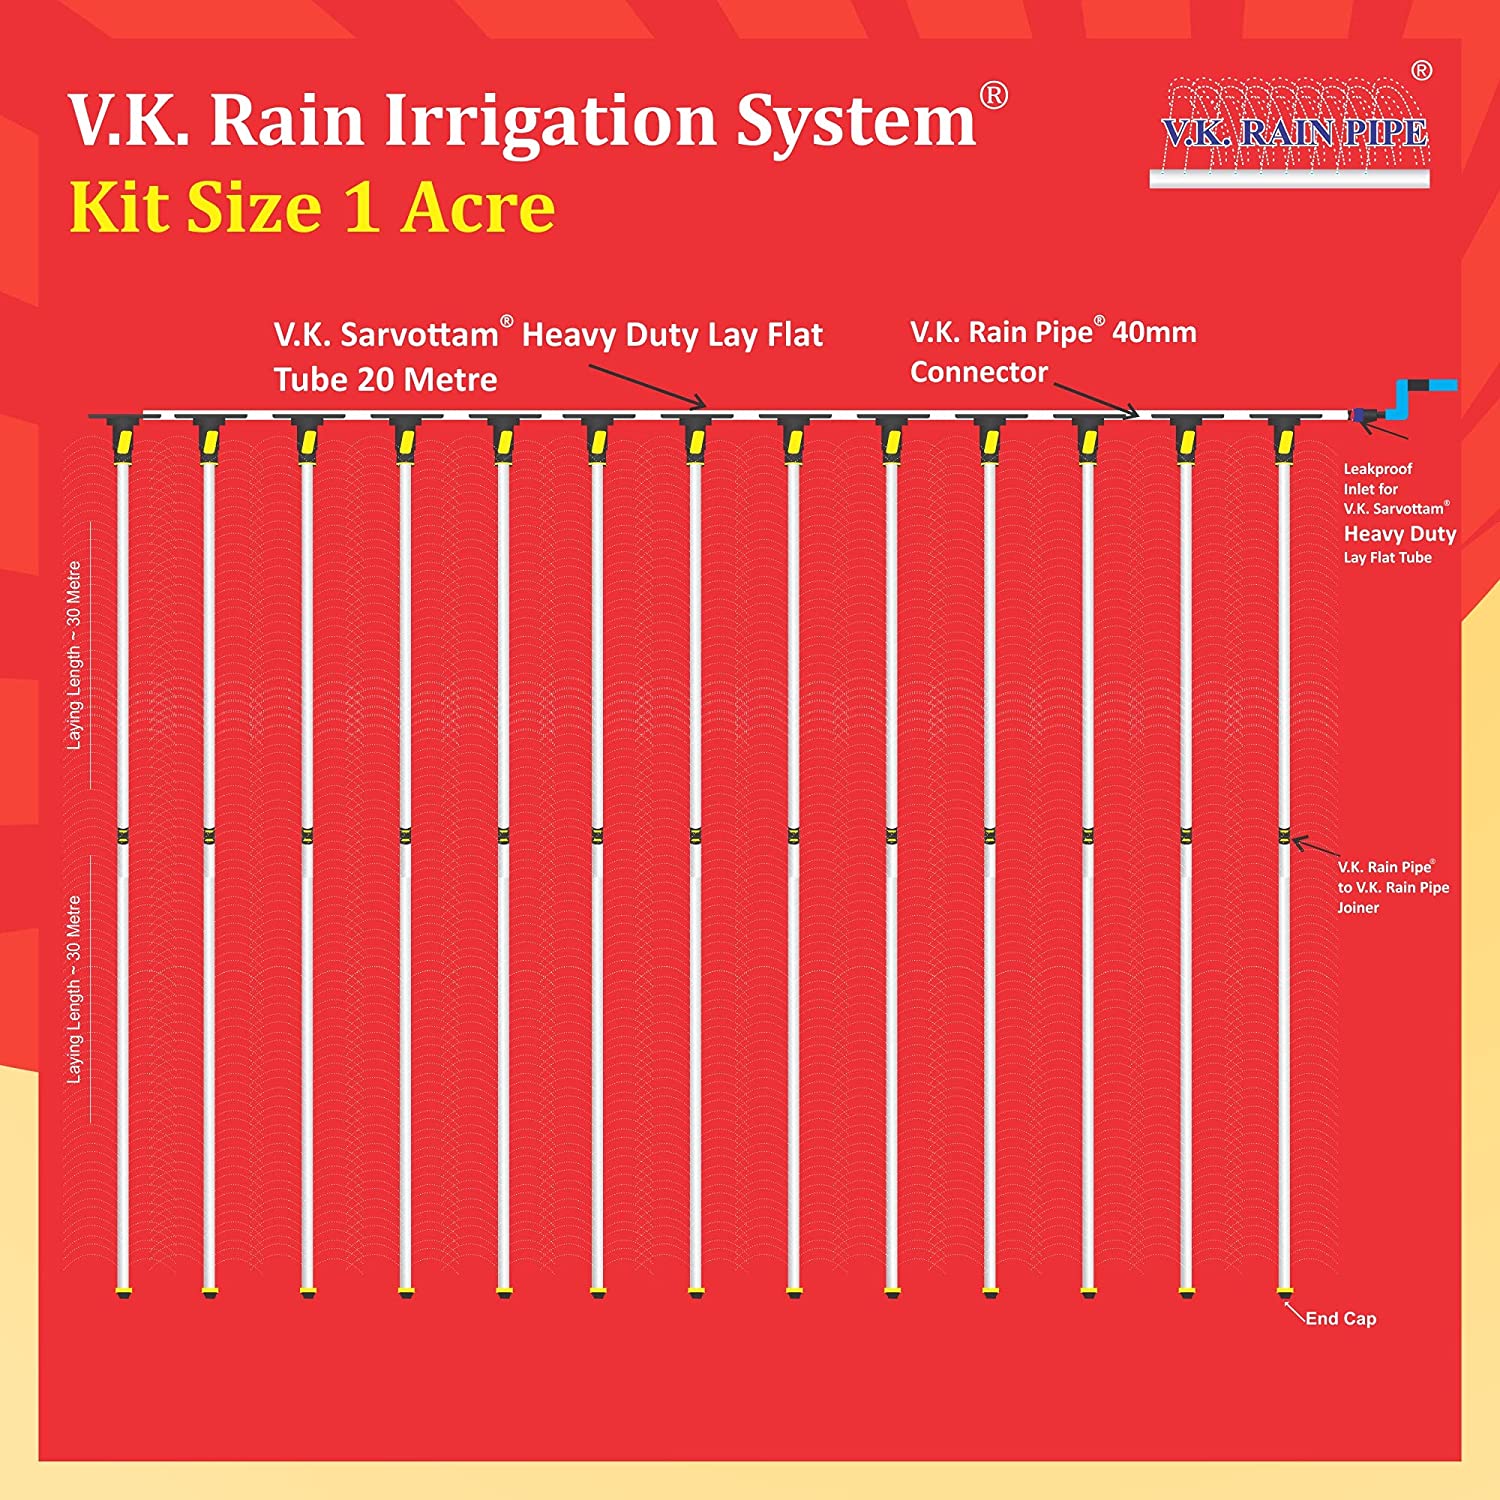 V.K. Rain Pipe Irrigation System